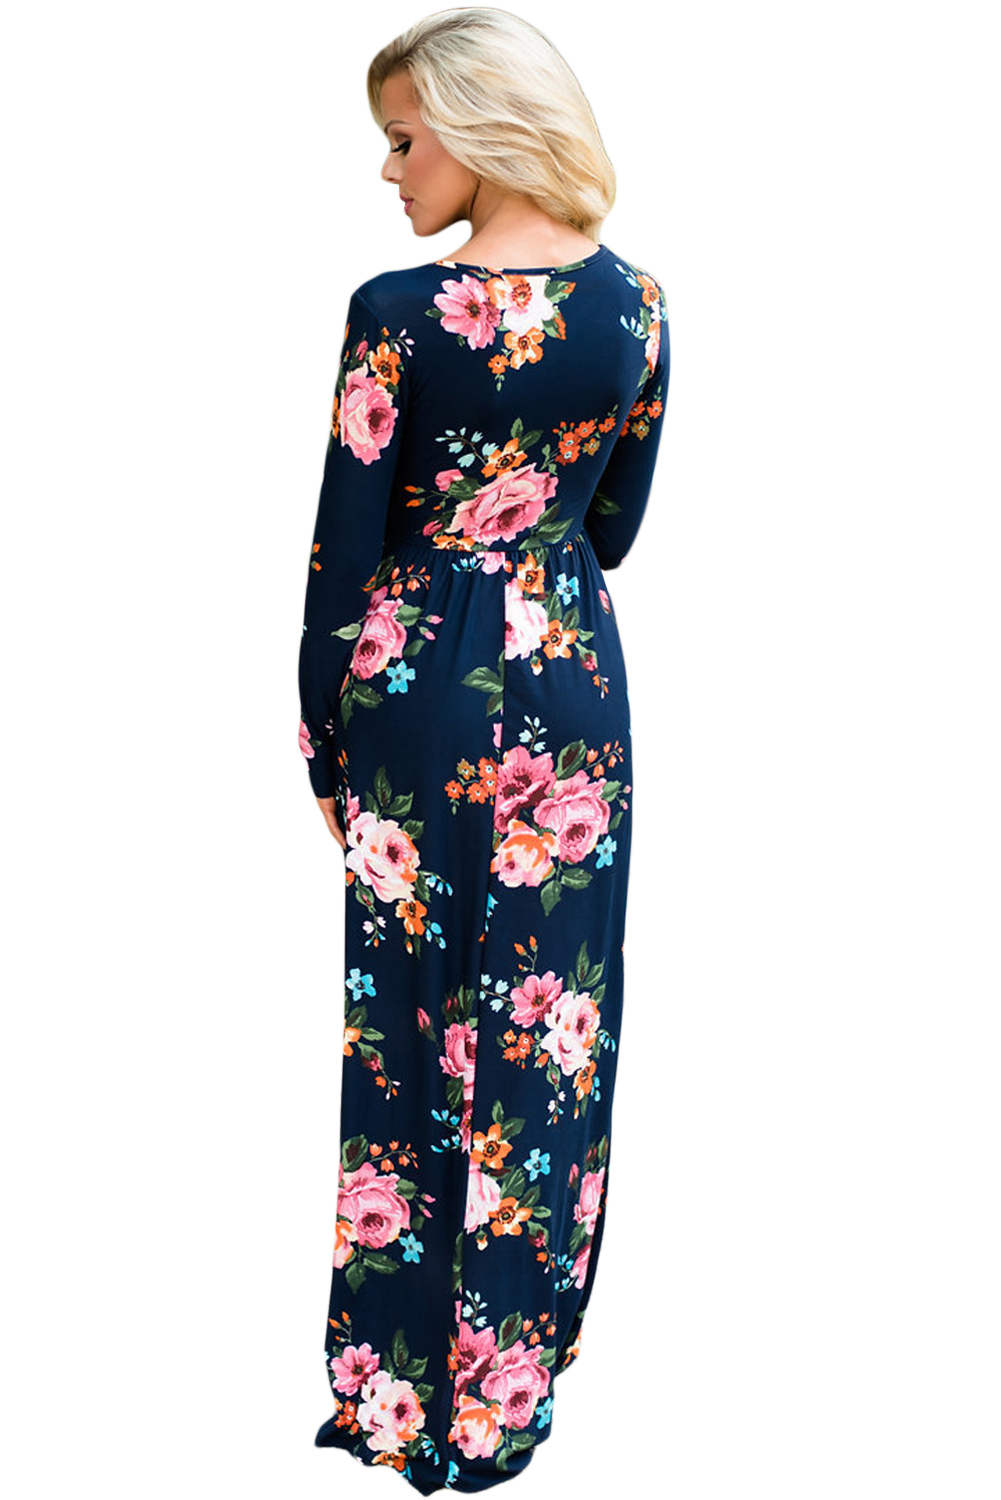 BY61772-5 Navy Floral Surplice Long Sleeve Maxi Boho Dress